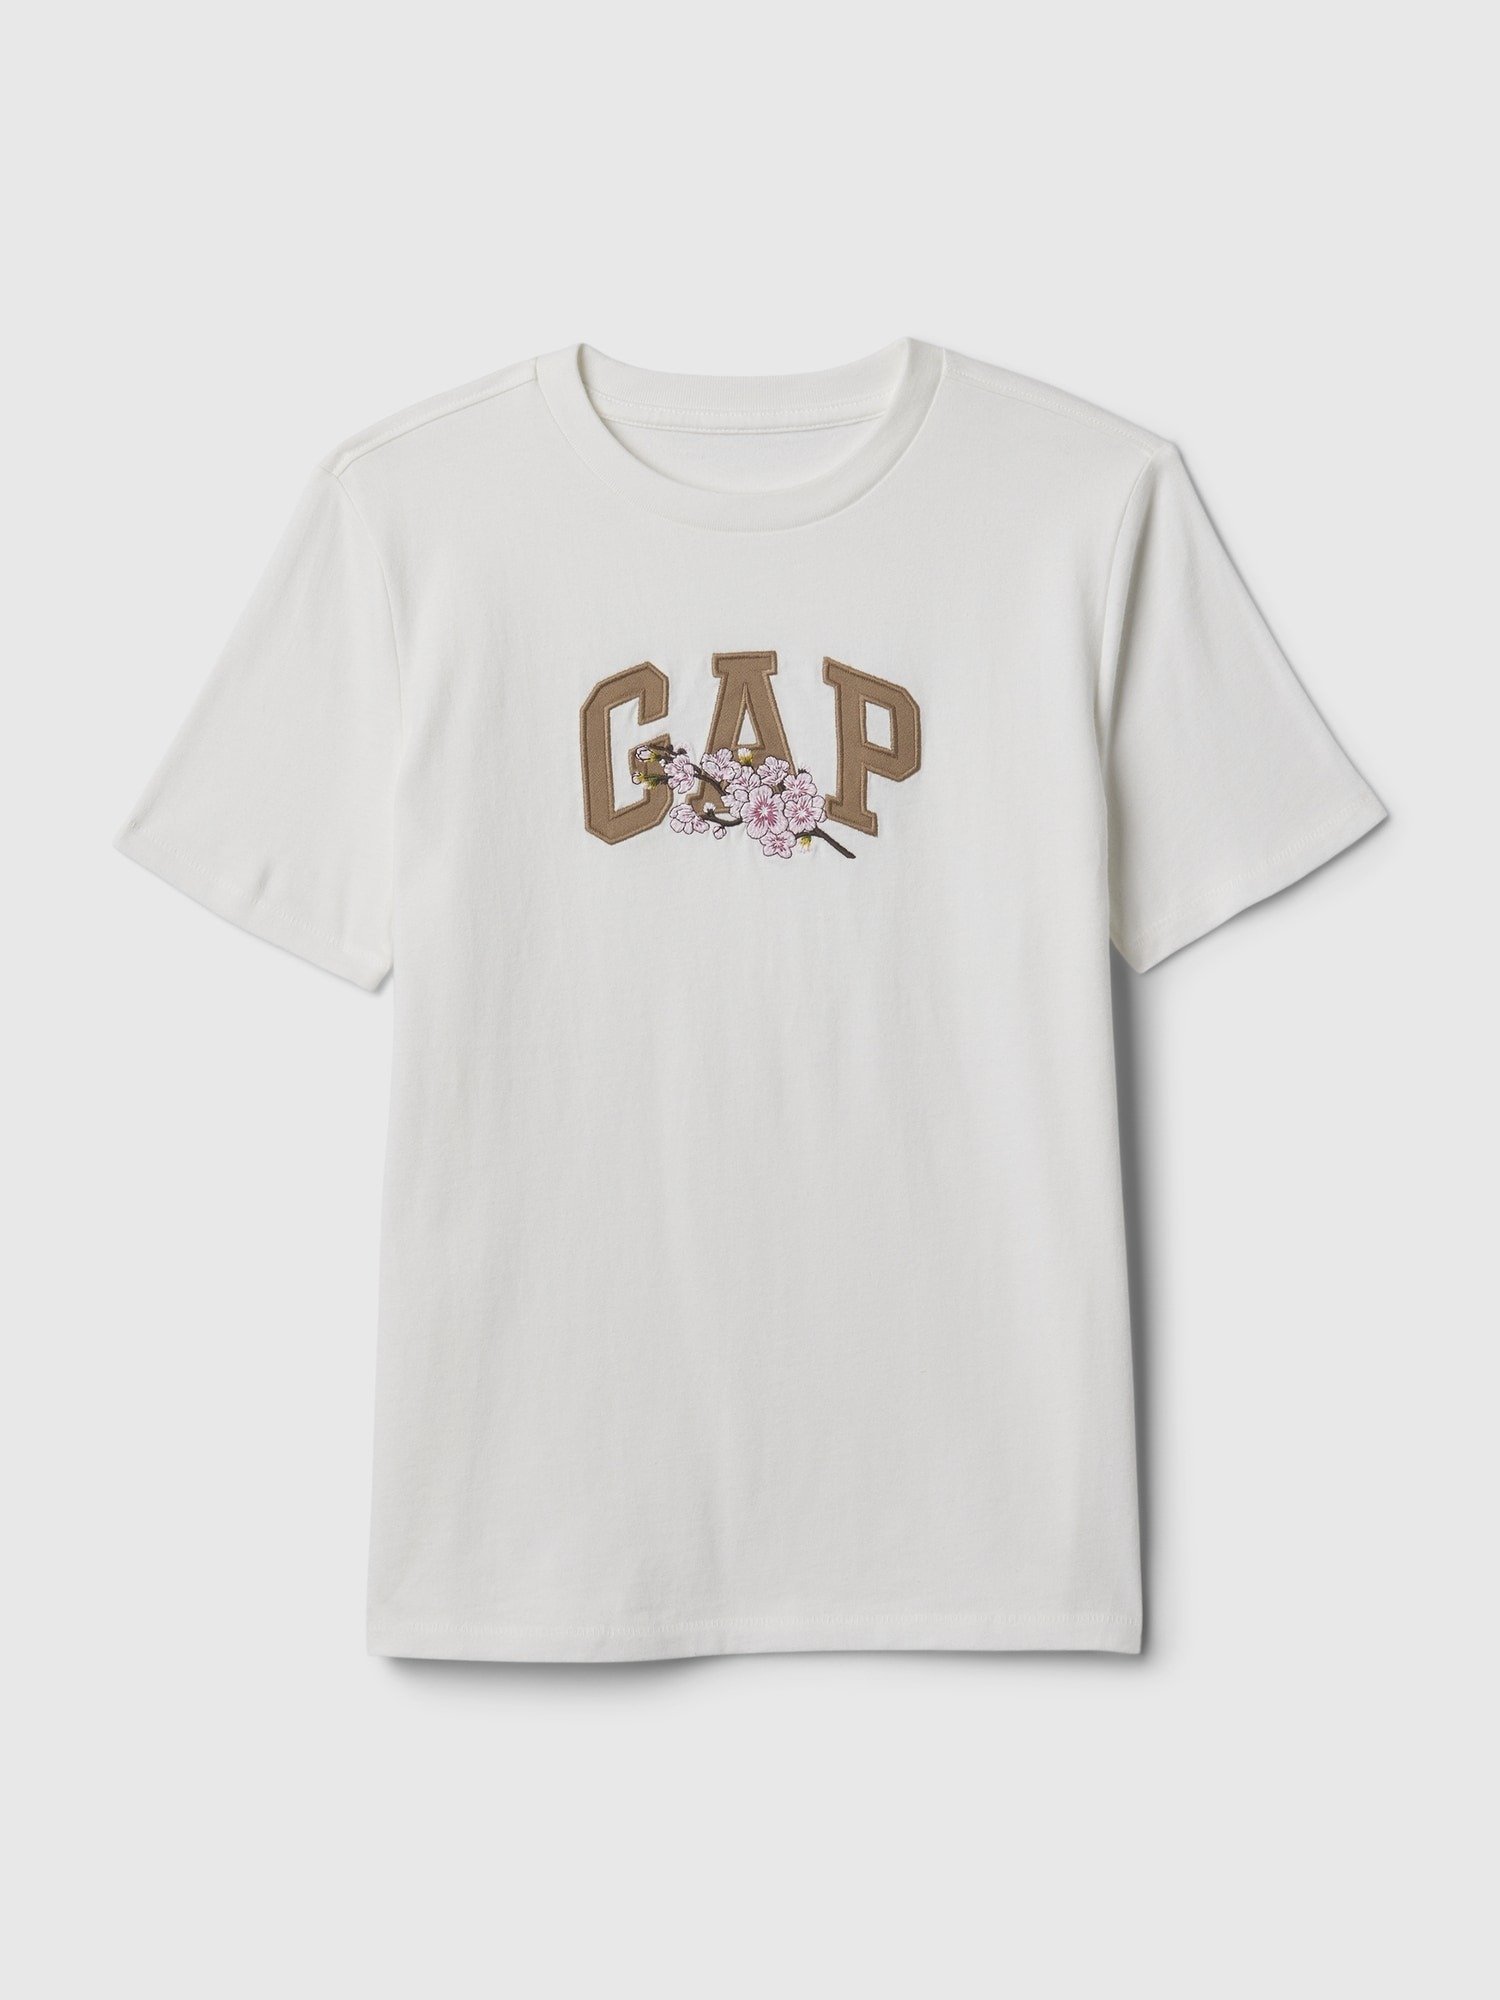 Gap Logo Çiçek İşlemeli T-Shirt product image